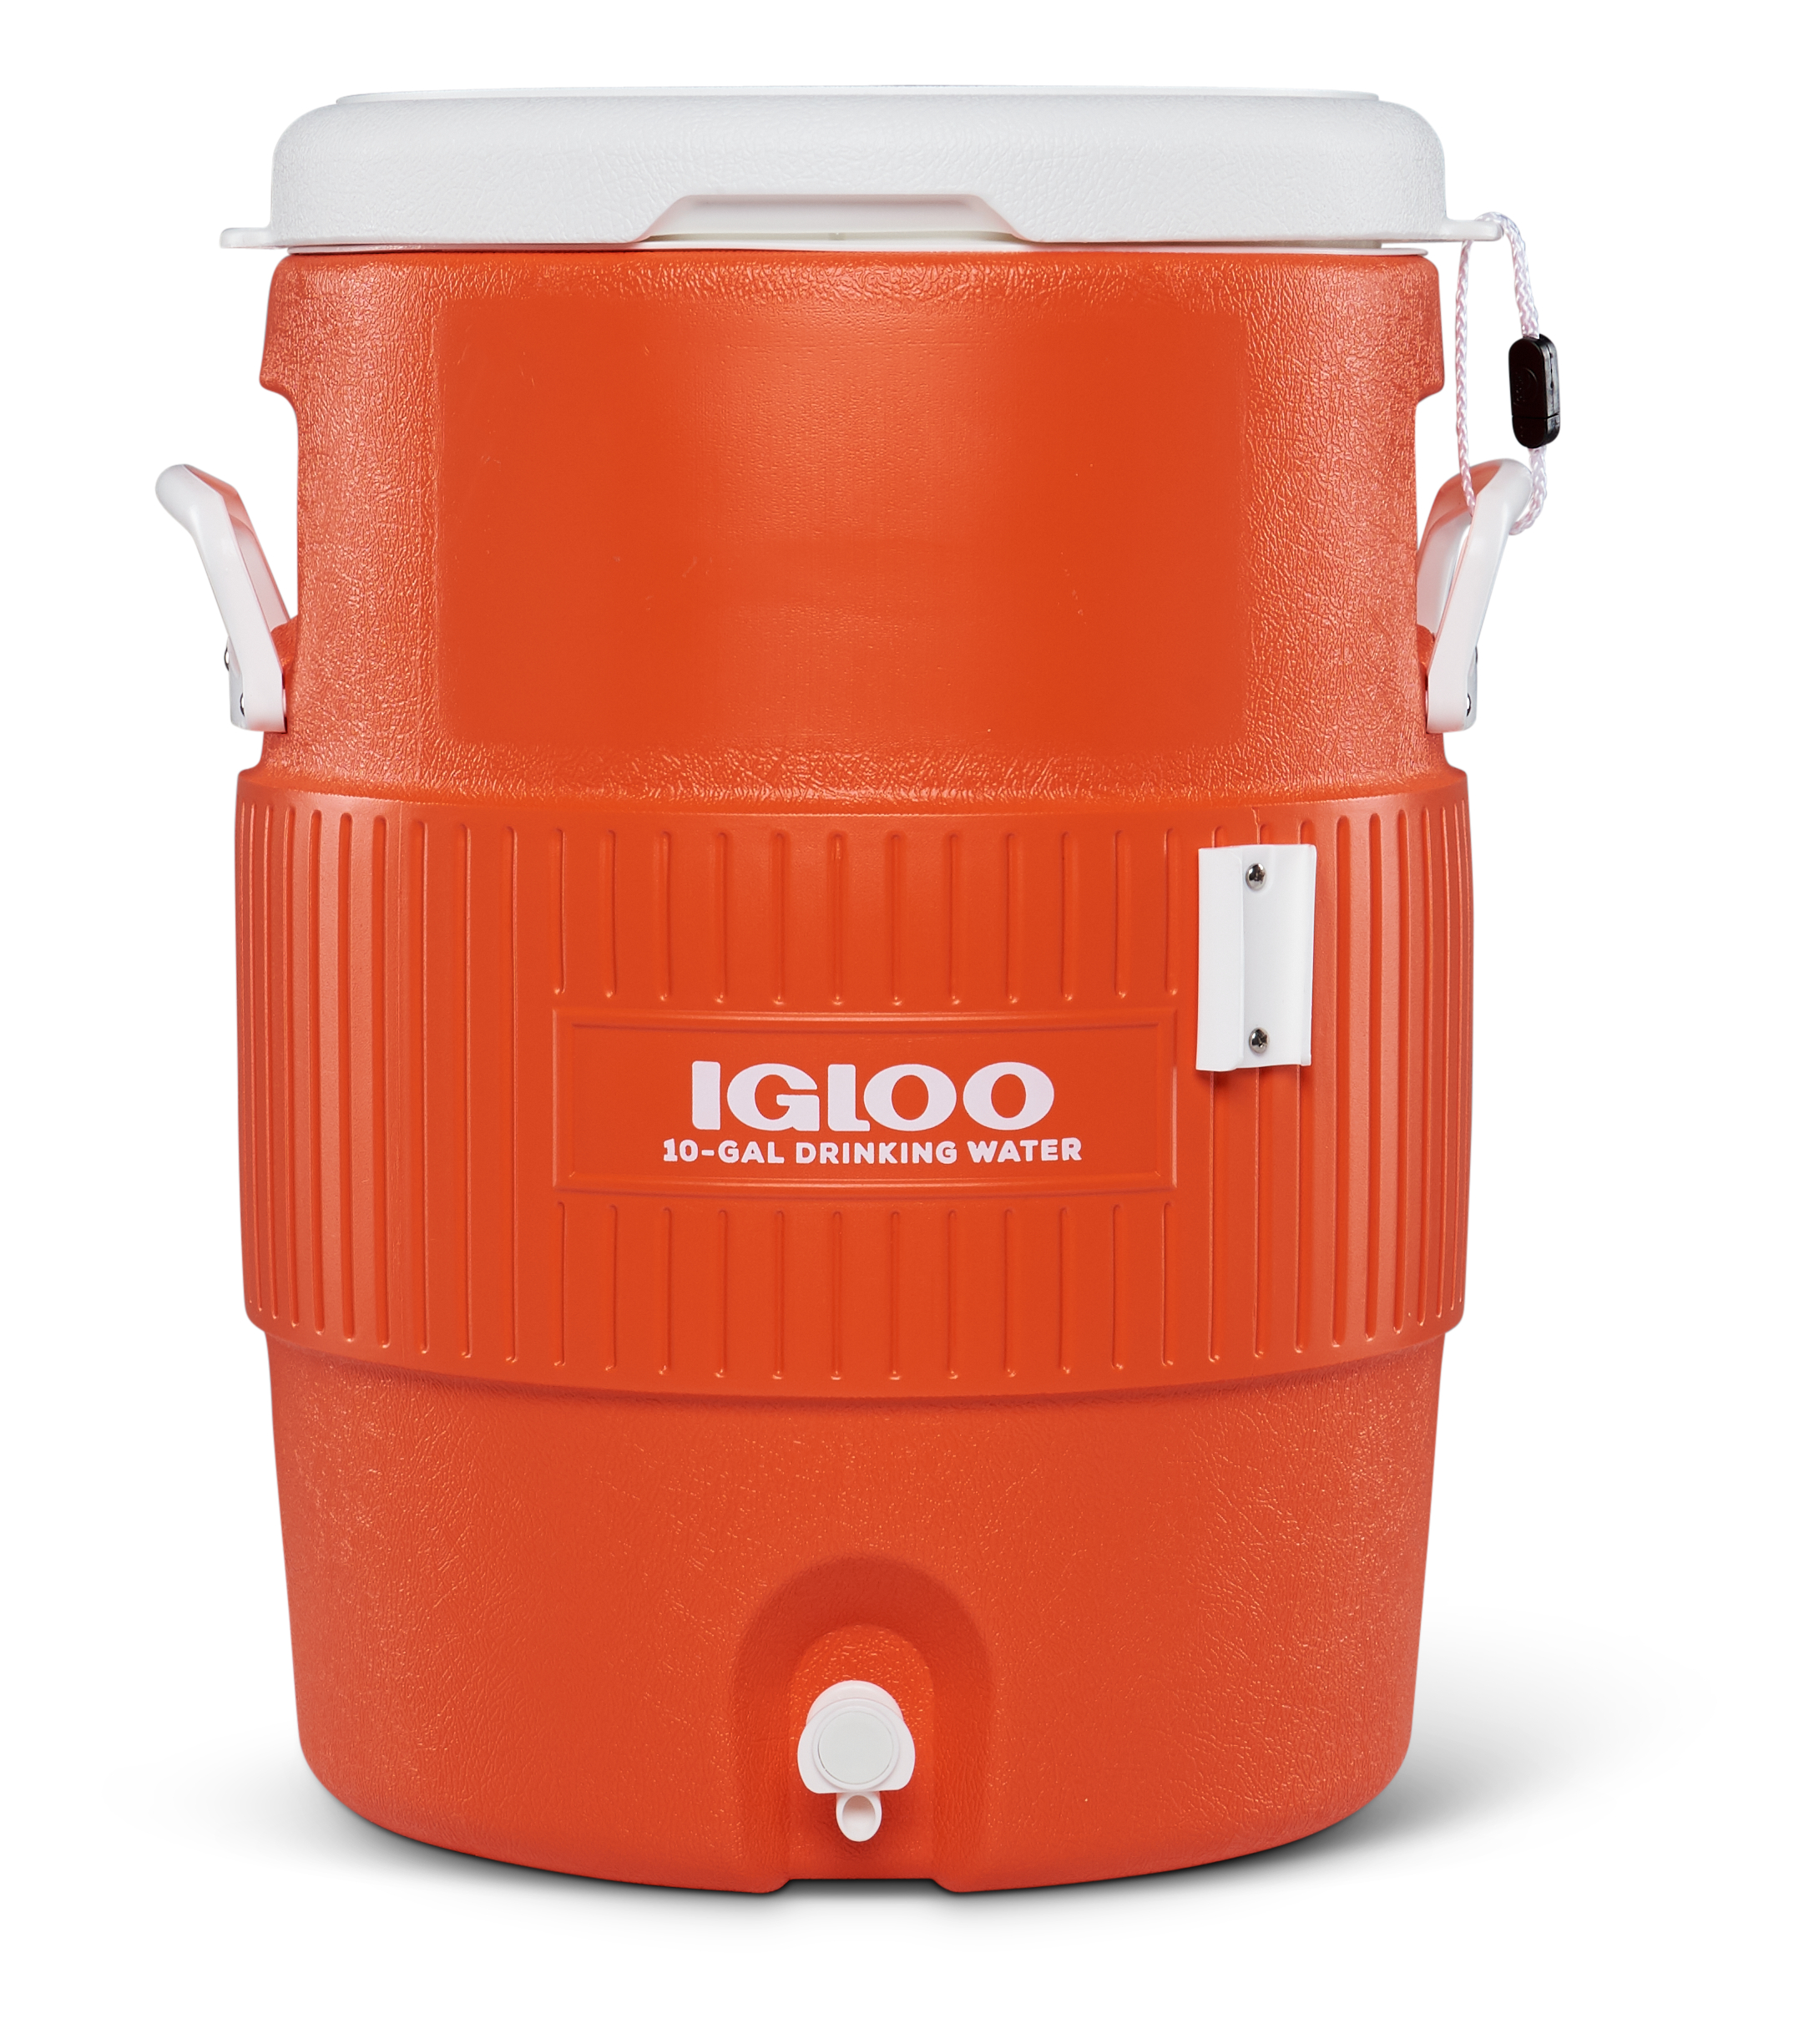 Igloo 10-Gallon Seat Top Water Jug with Cup Dispenser, Orange - image 1 of 6